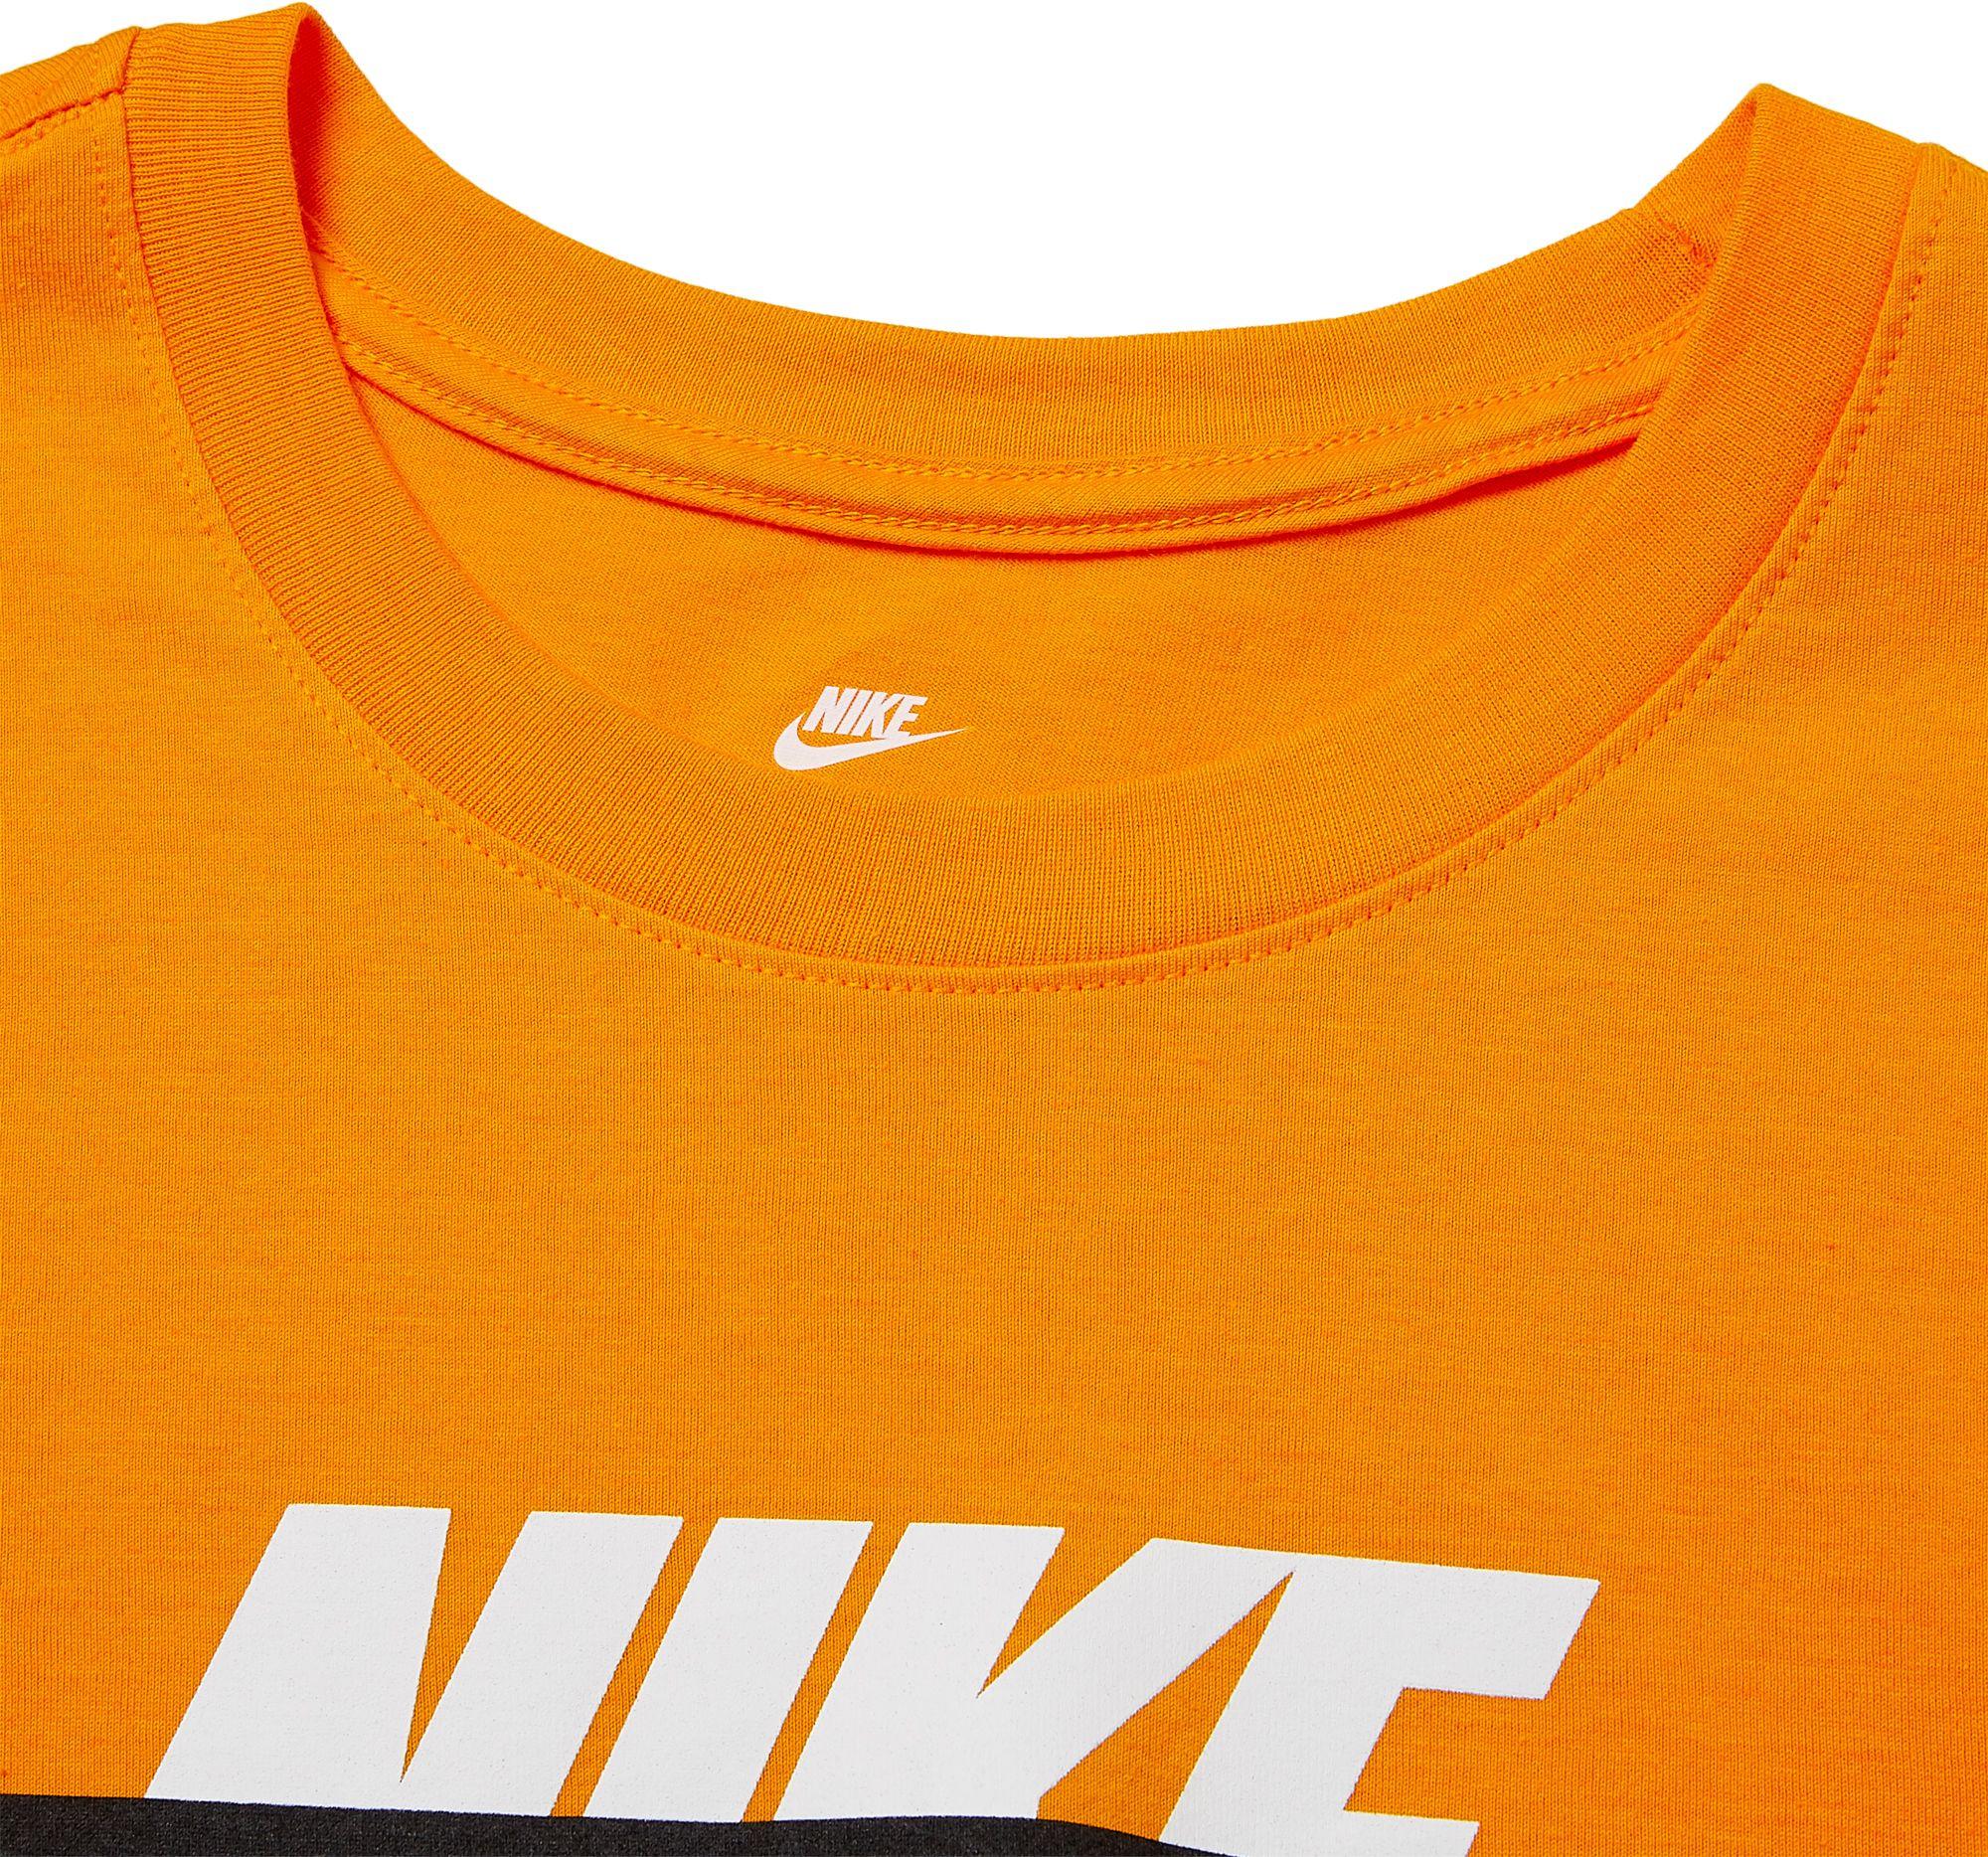 Nike Cotton Sportswear Just Do It Graphic Tee in Orange for Men - Lyst